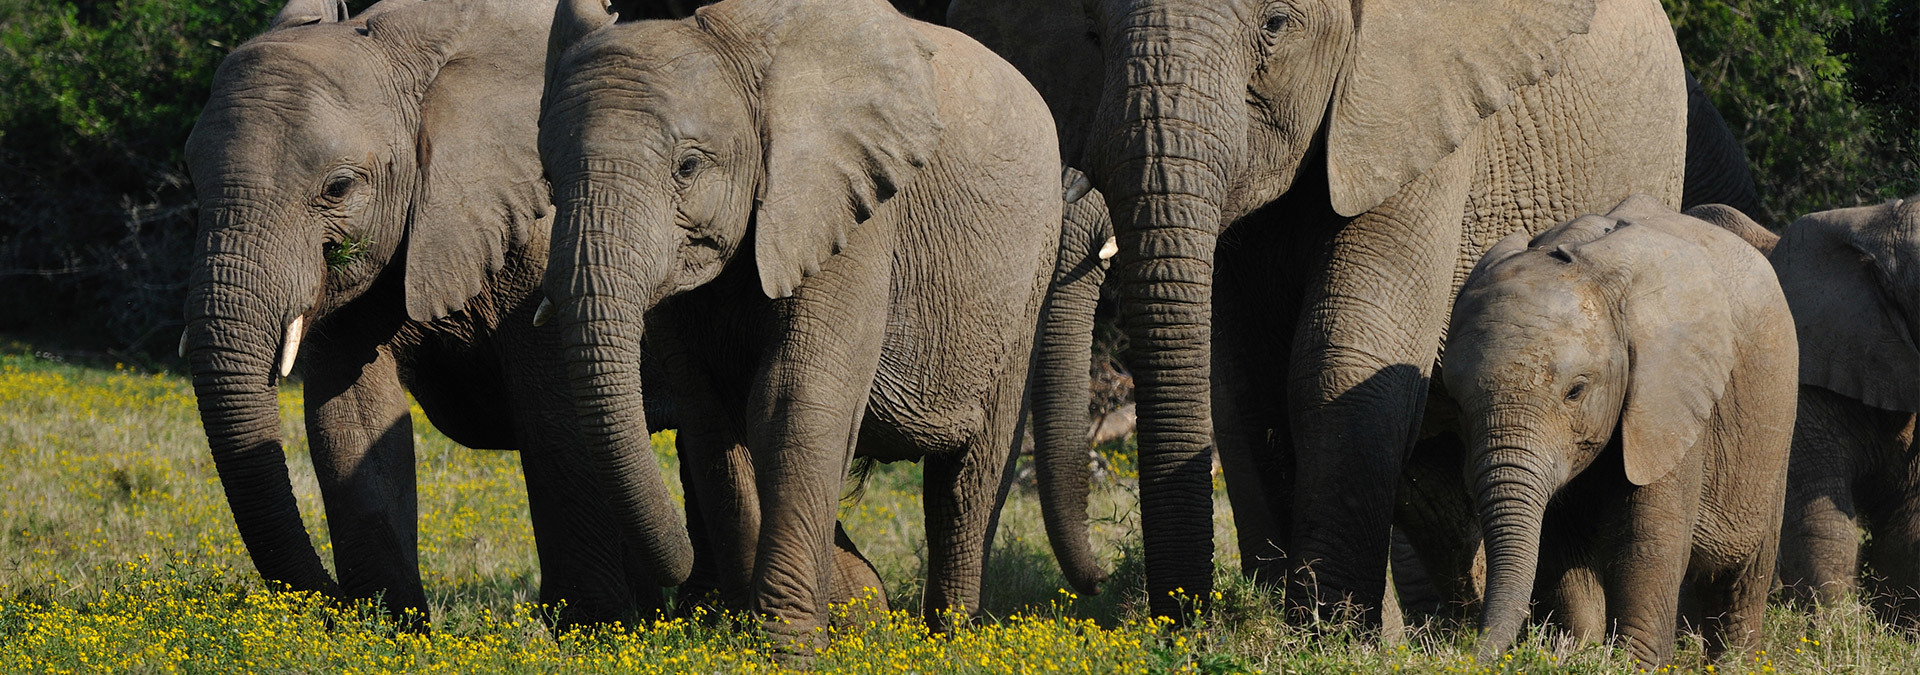 Group-of-elephants-NEW.jpg